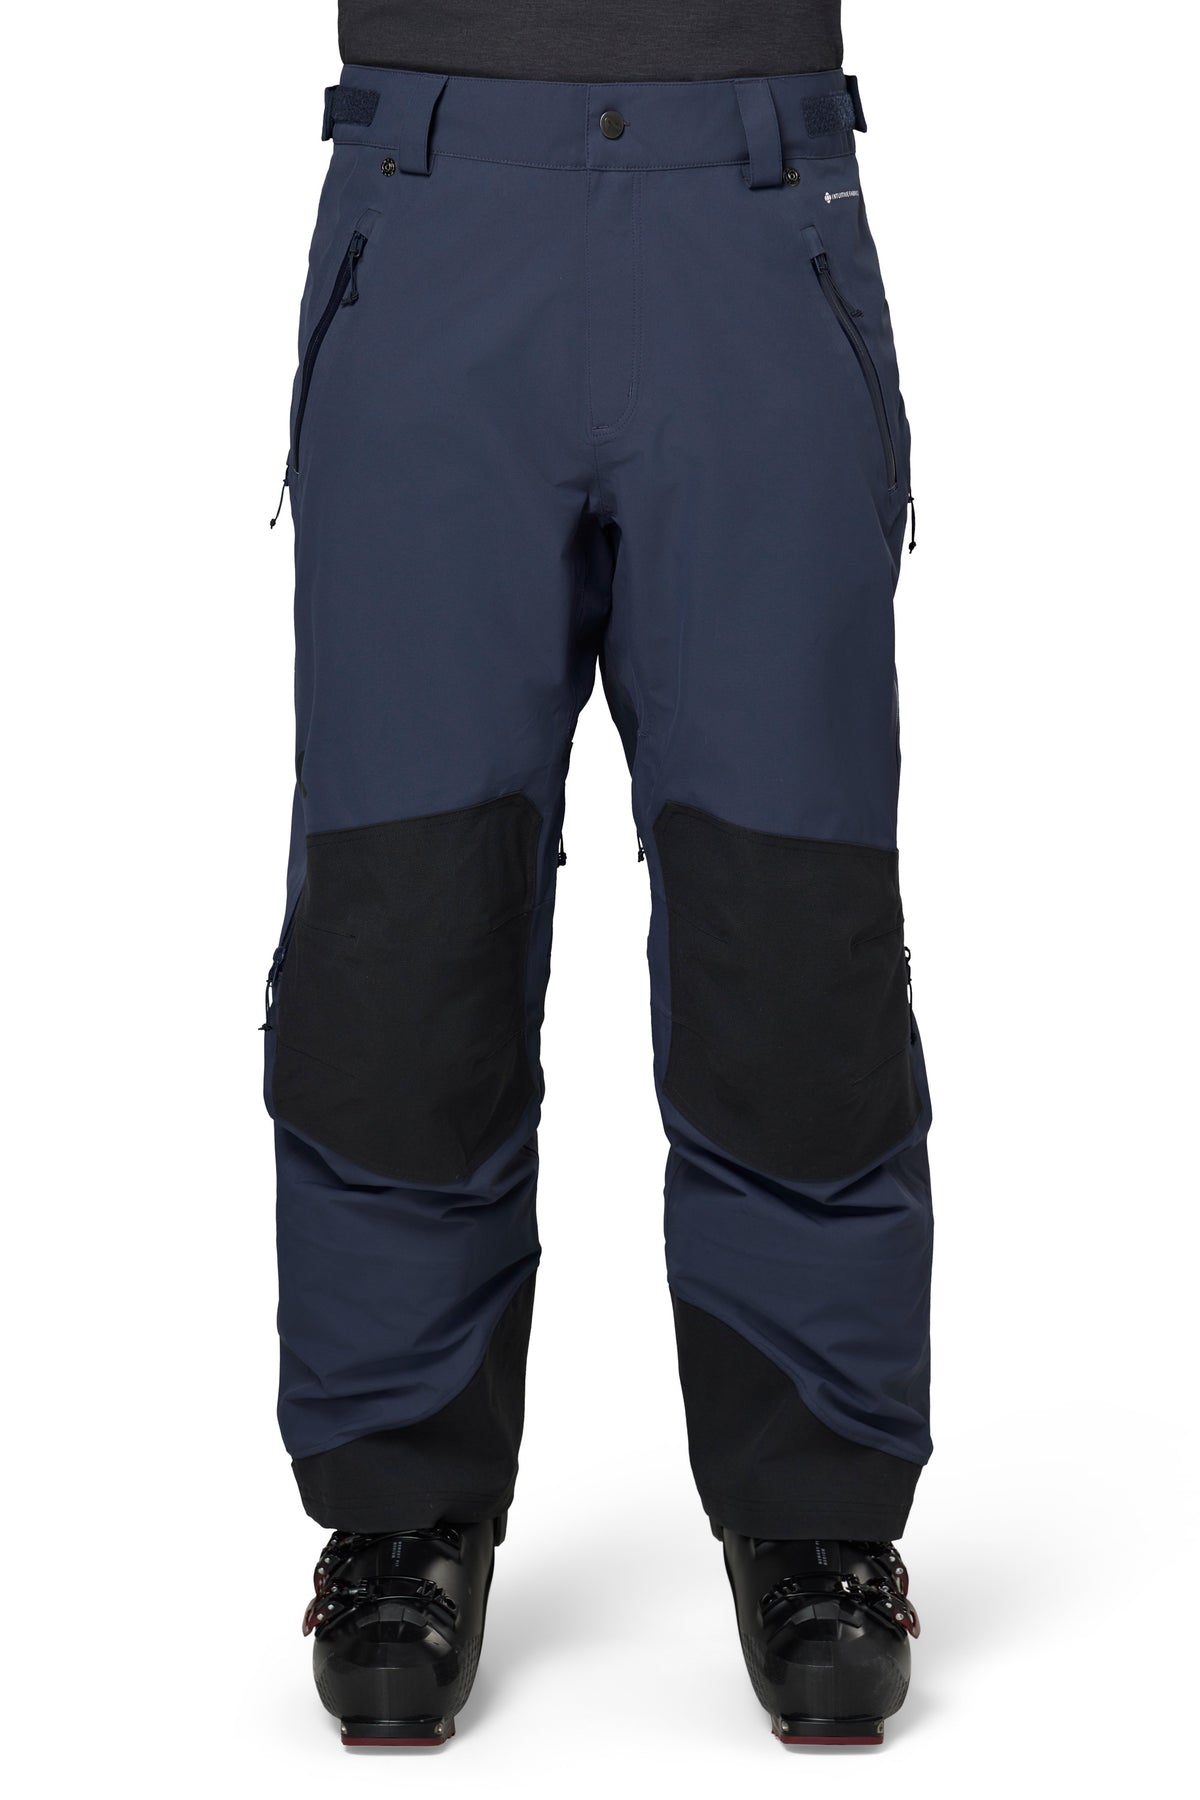 Peak Performance - Stretch Ski Pants Women - Dark blue ski pants